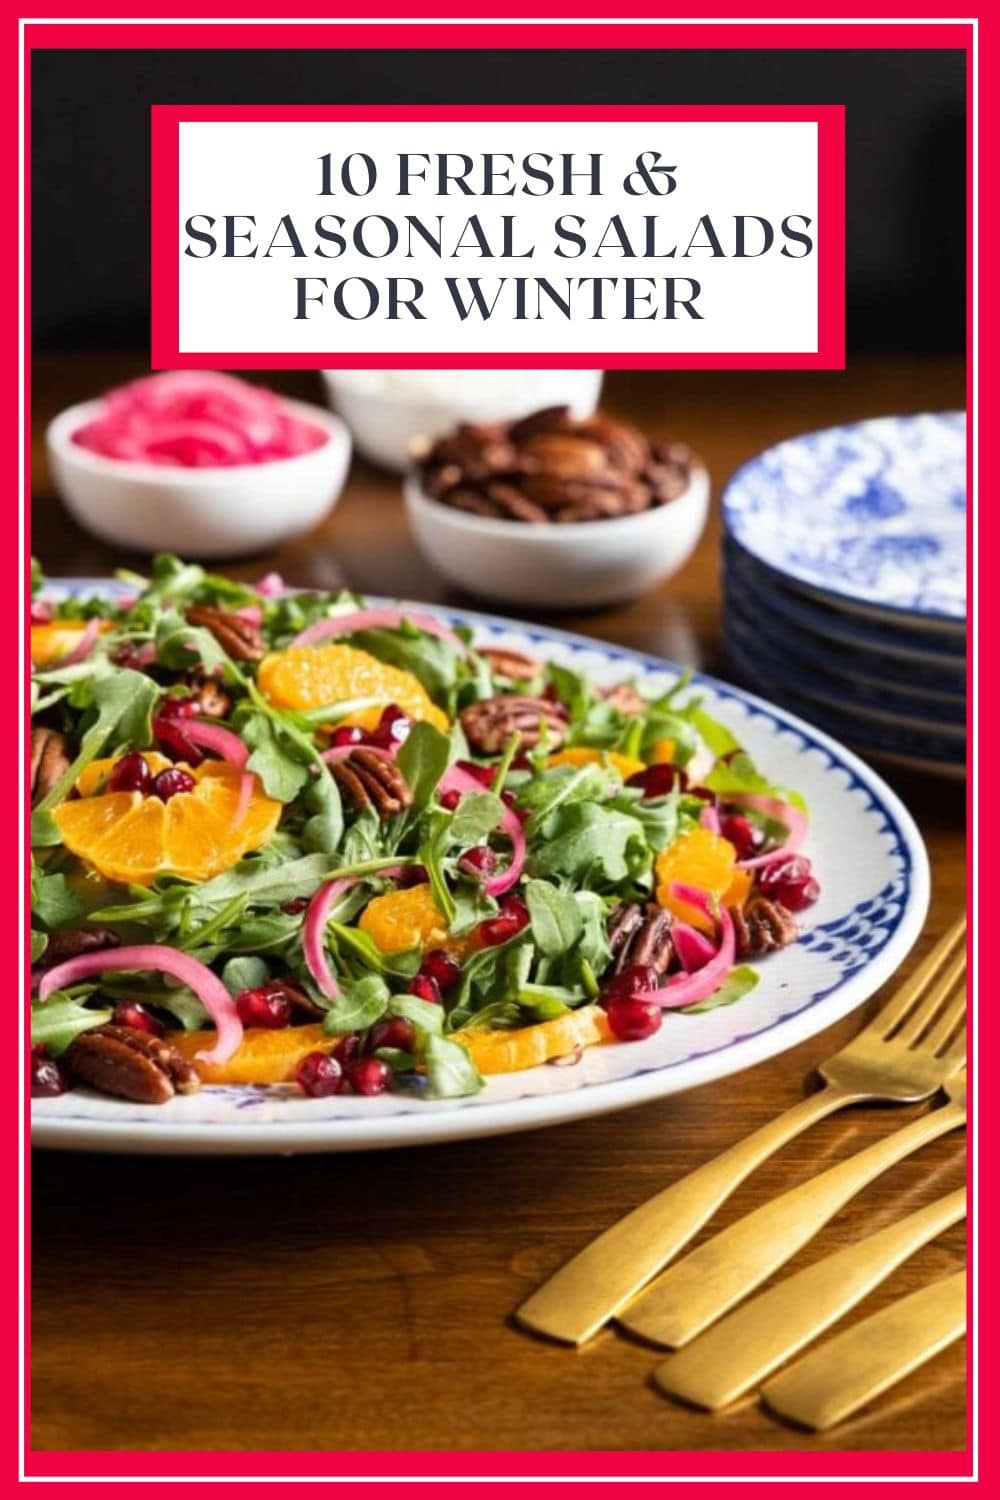 10 Simply Sensational Seasonal Salads